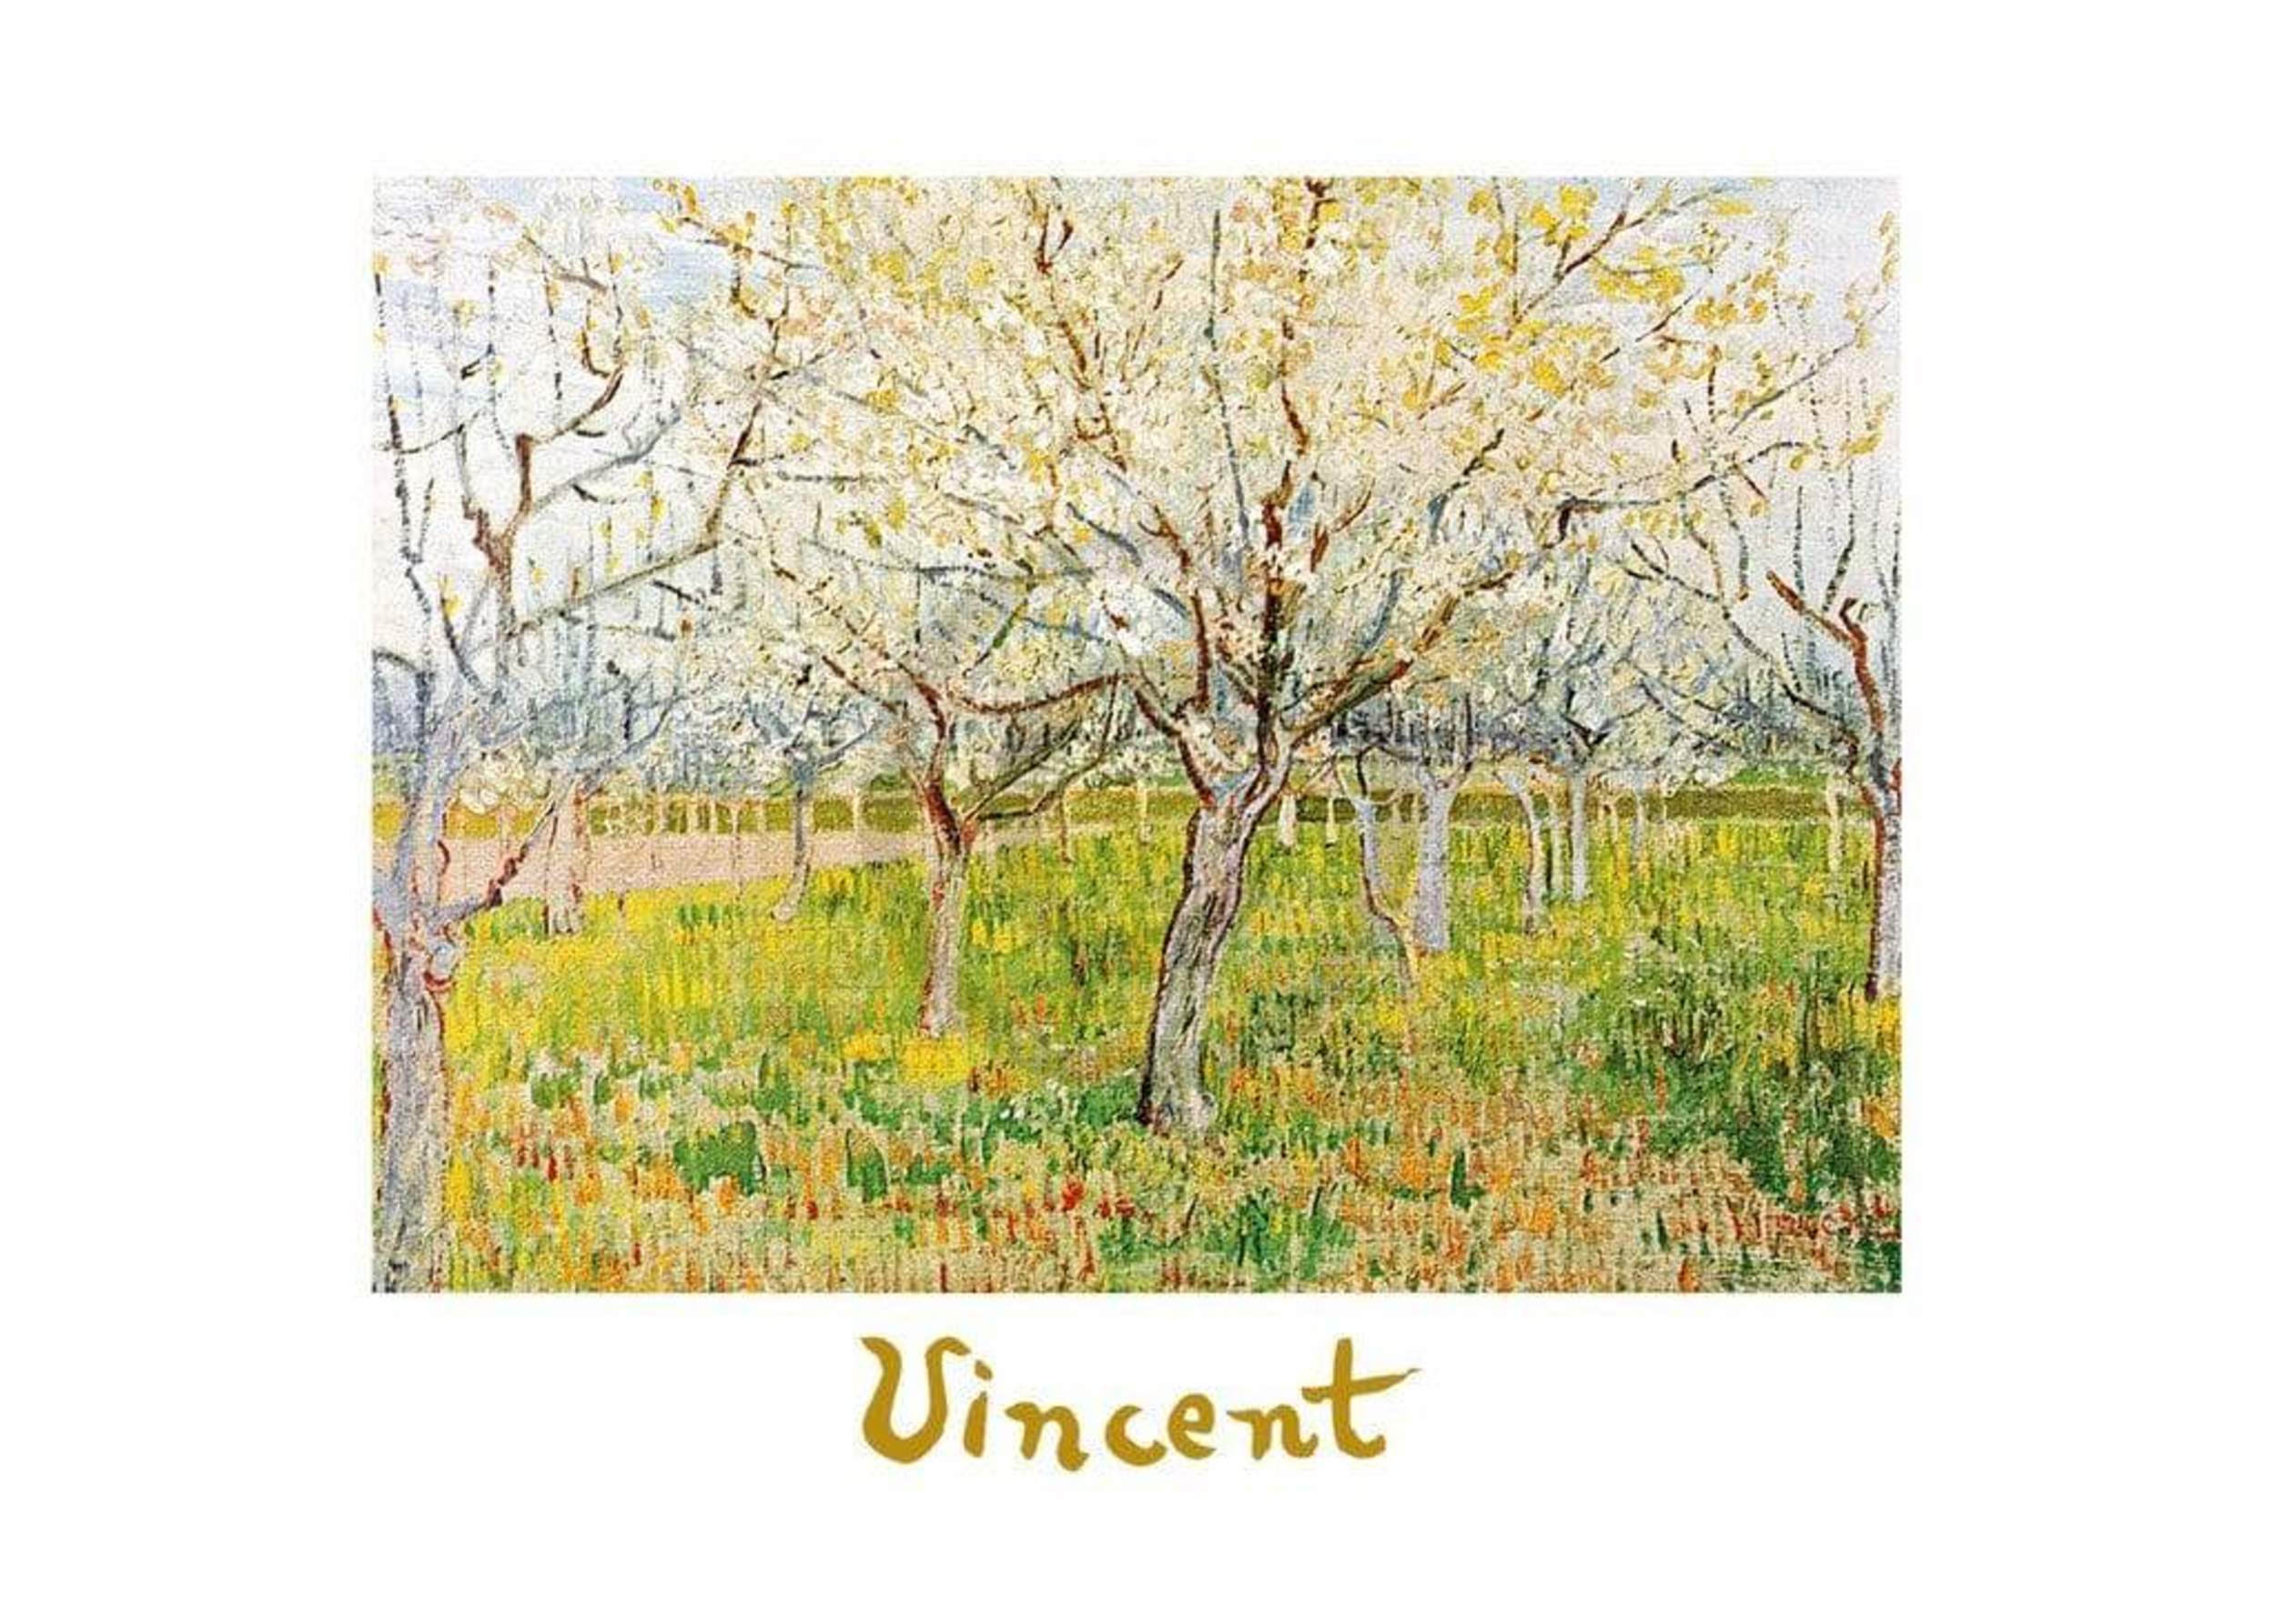 Kunstdruk Vincent van Gogh The Orchard 70x50cm